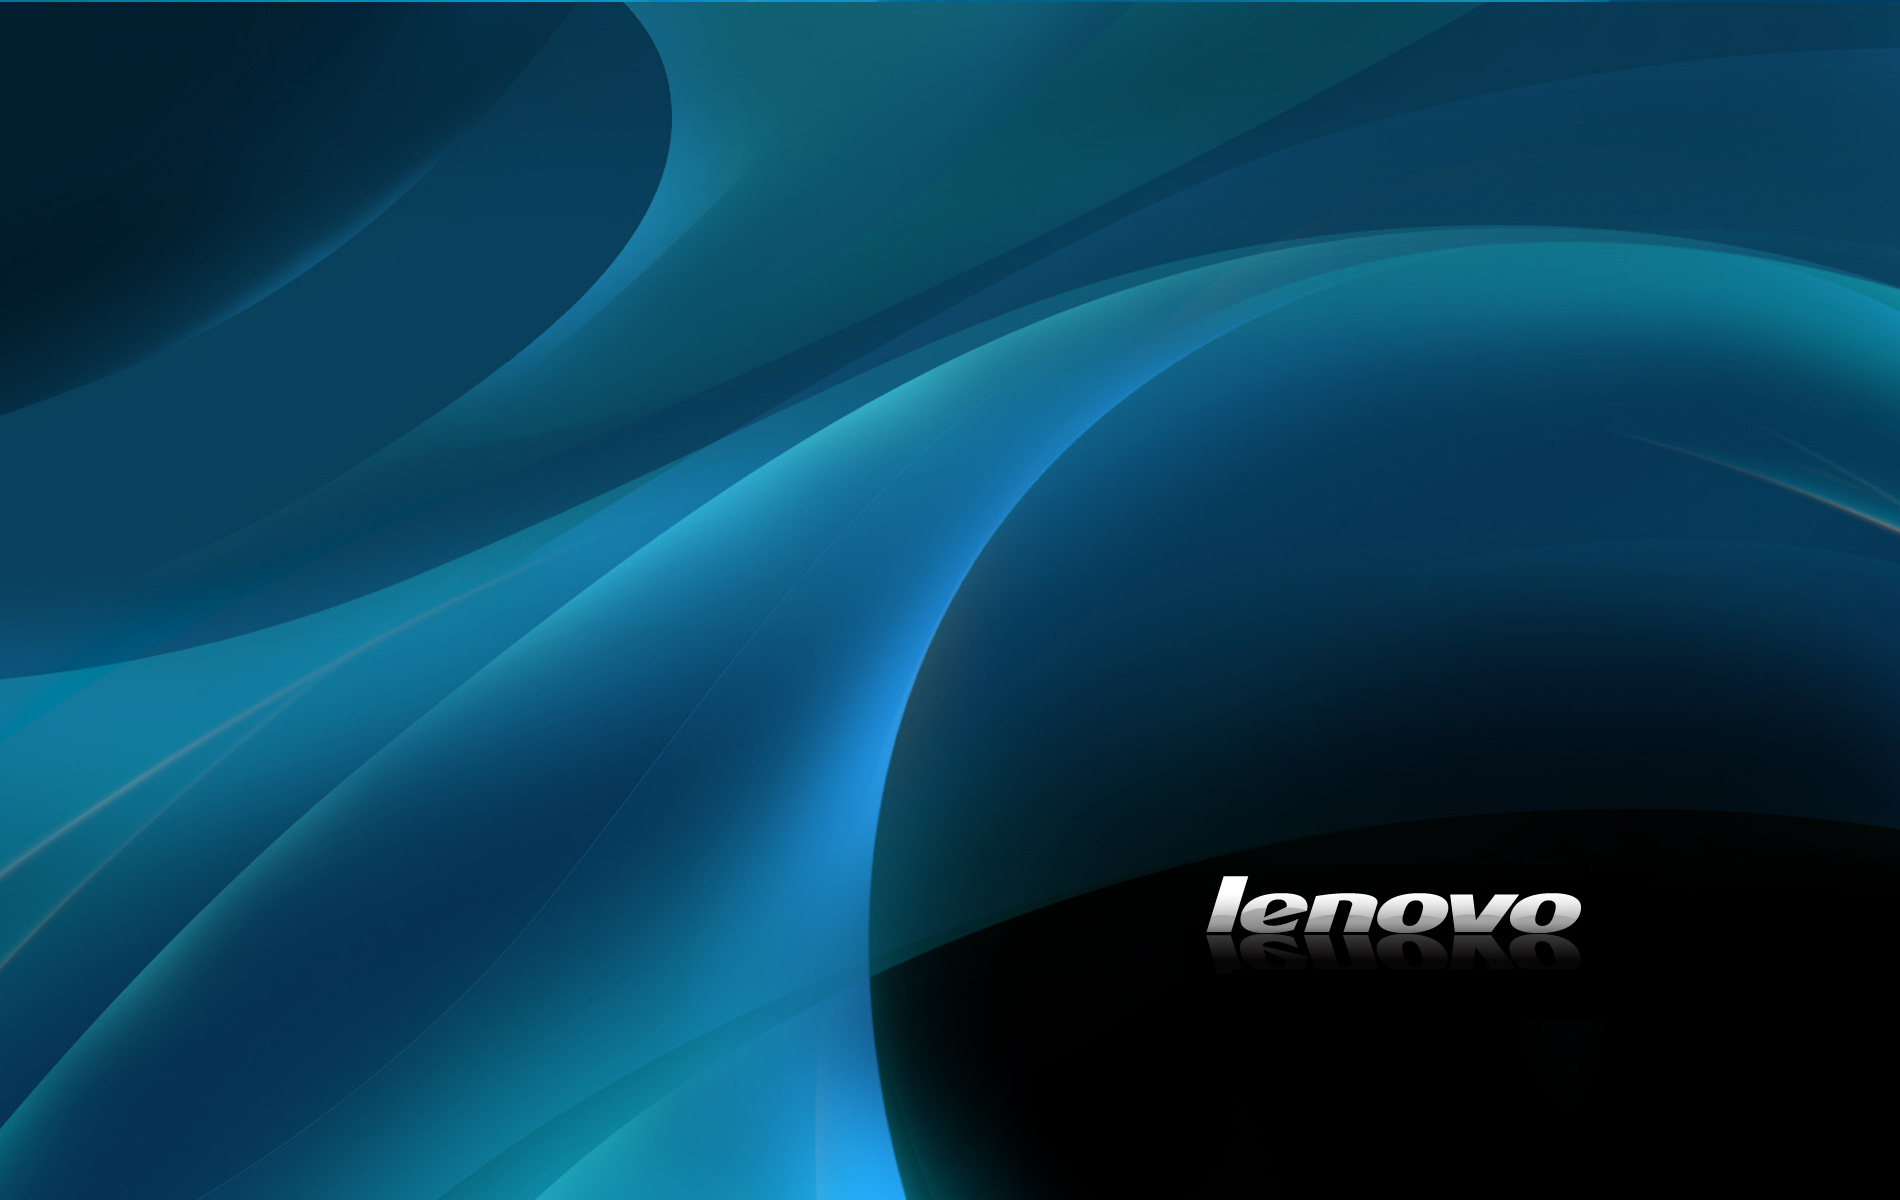 Lenovo Thinkpad New World Thinking Wallpaper For Fans